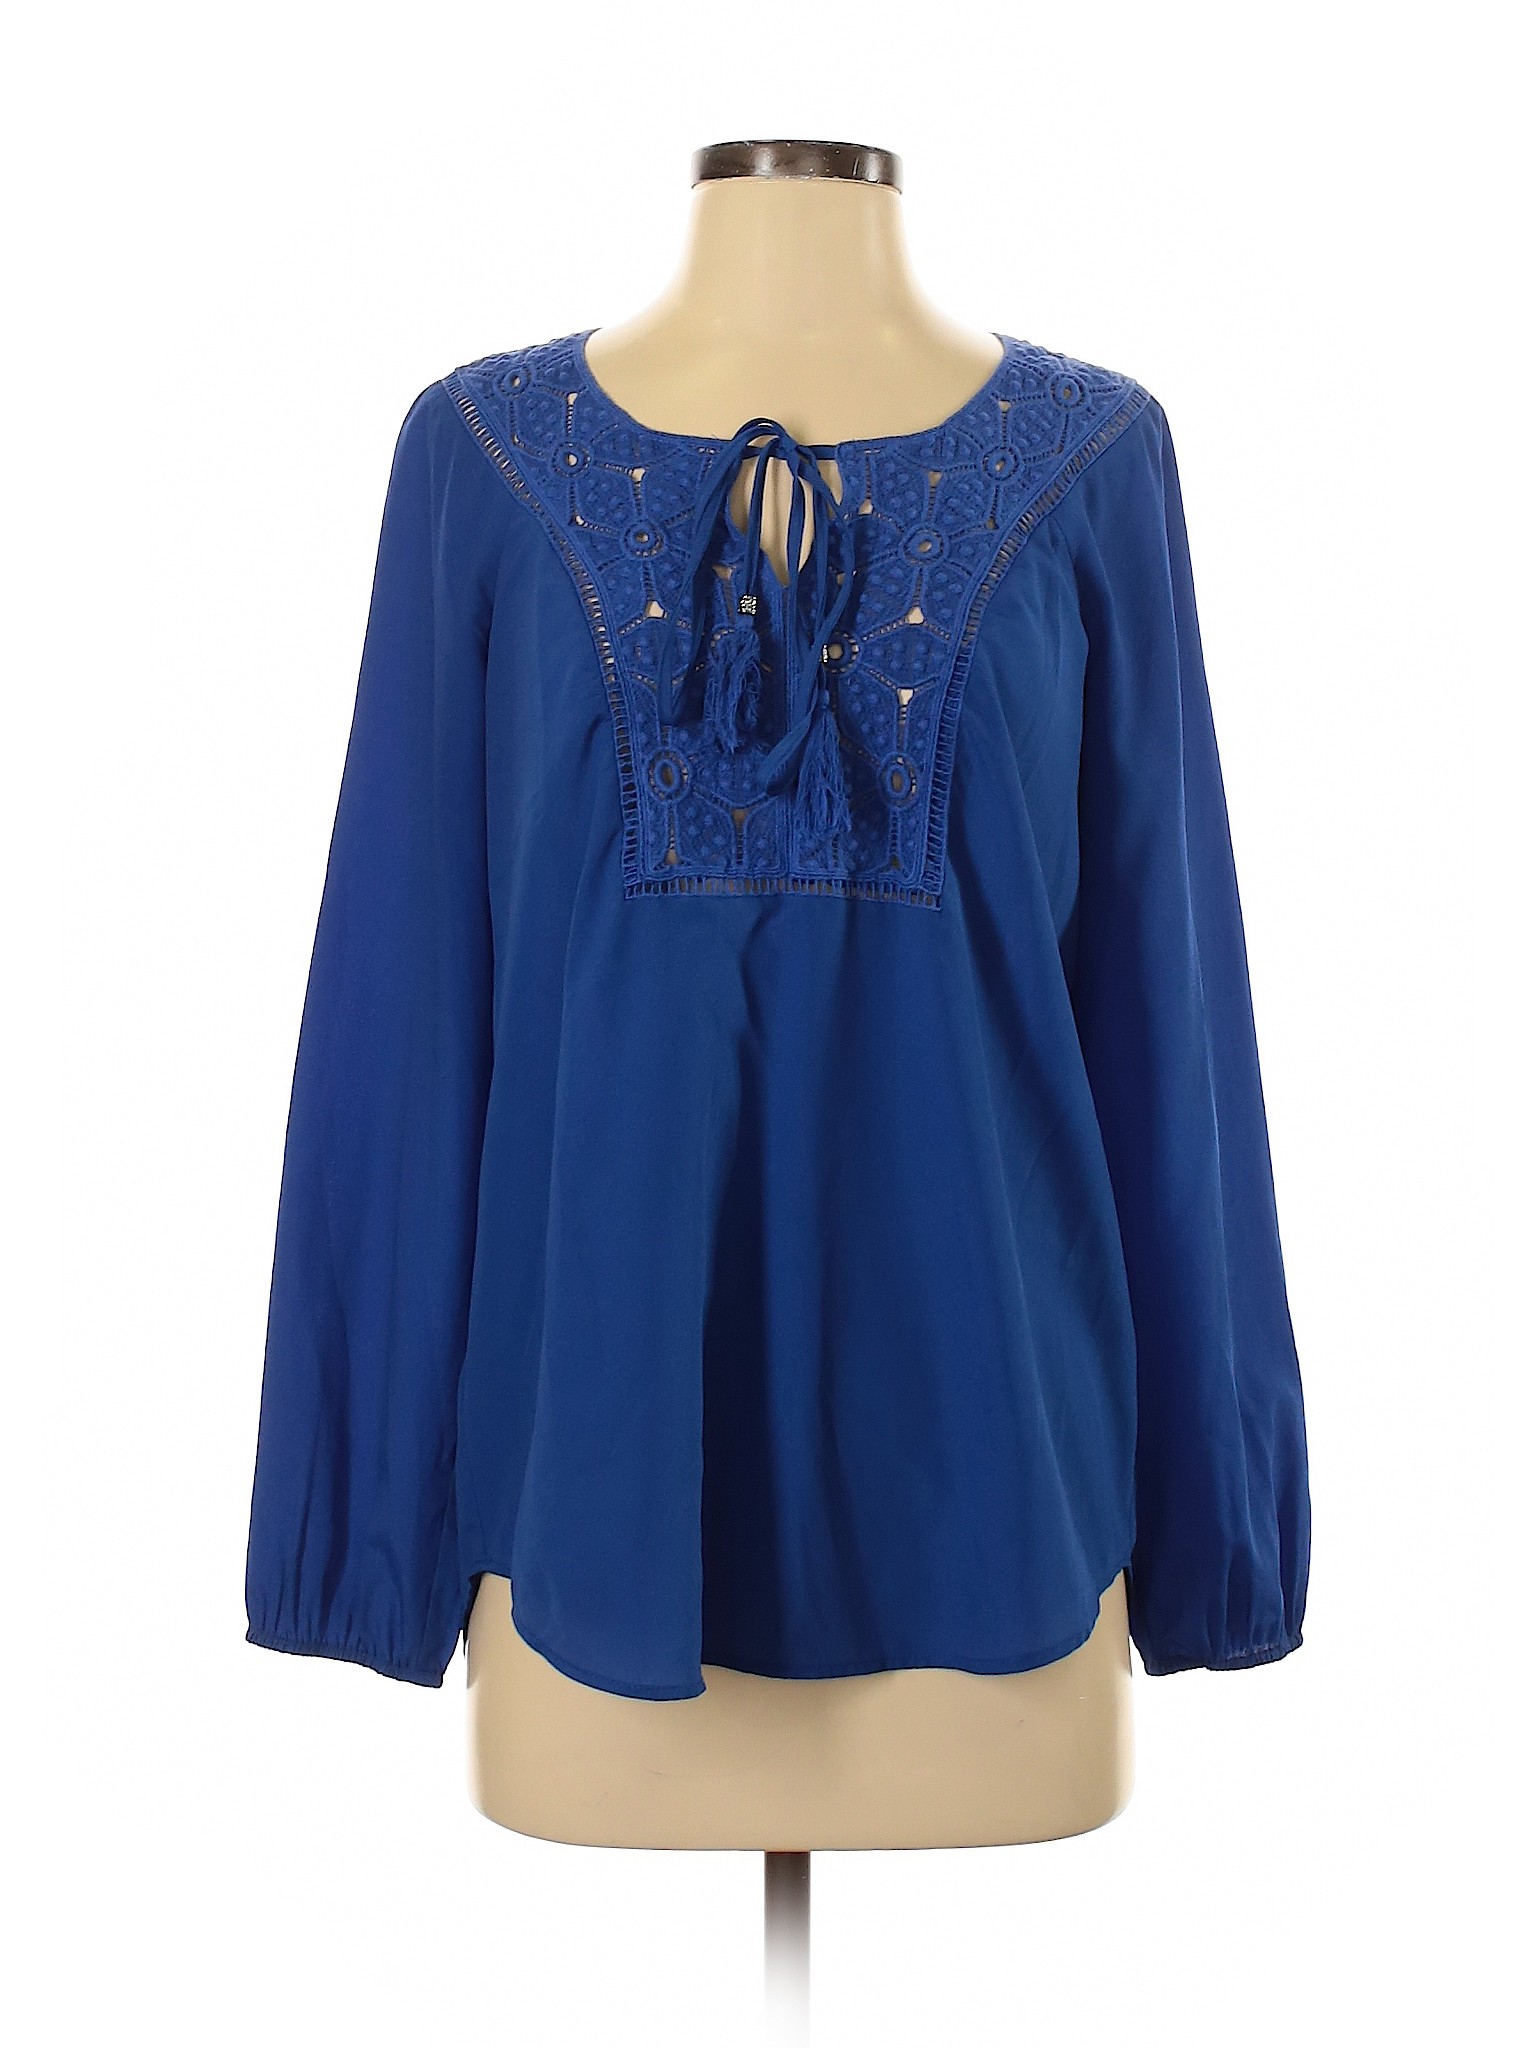 Daniel Rainn Women Blue Long Sleeve Blouse S | eBay